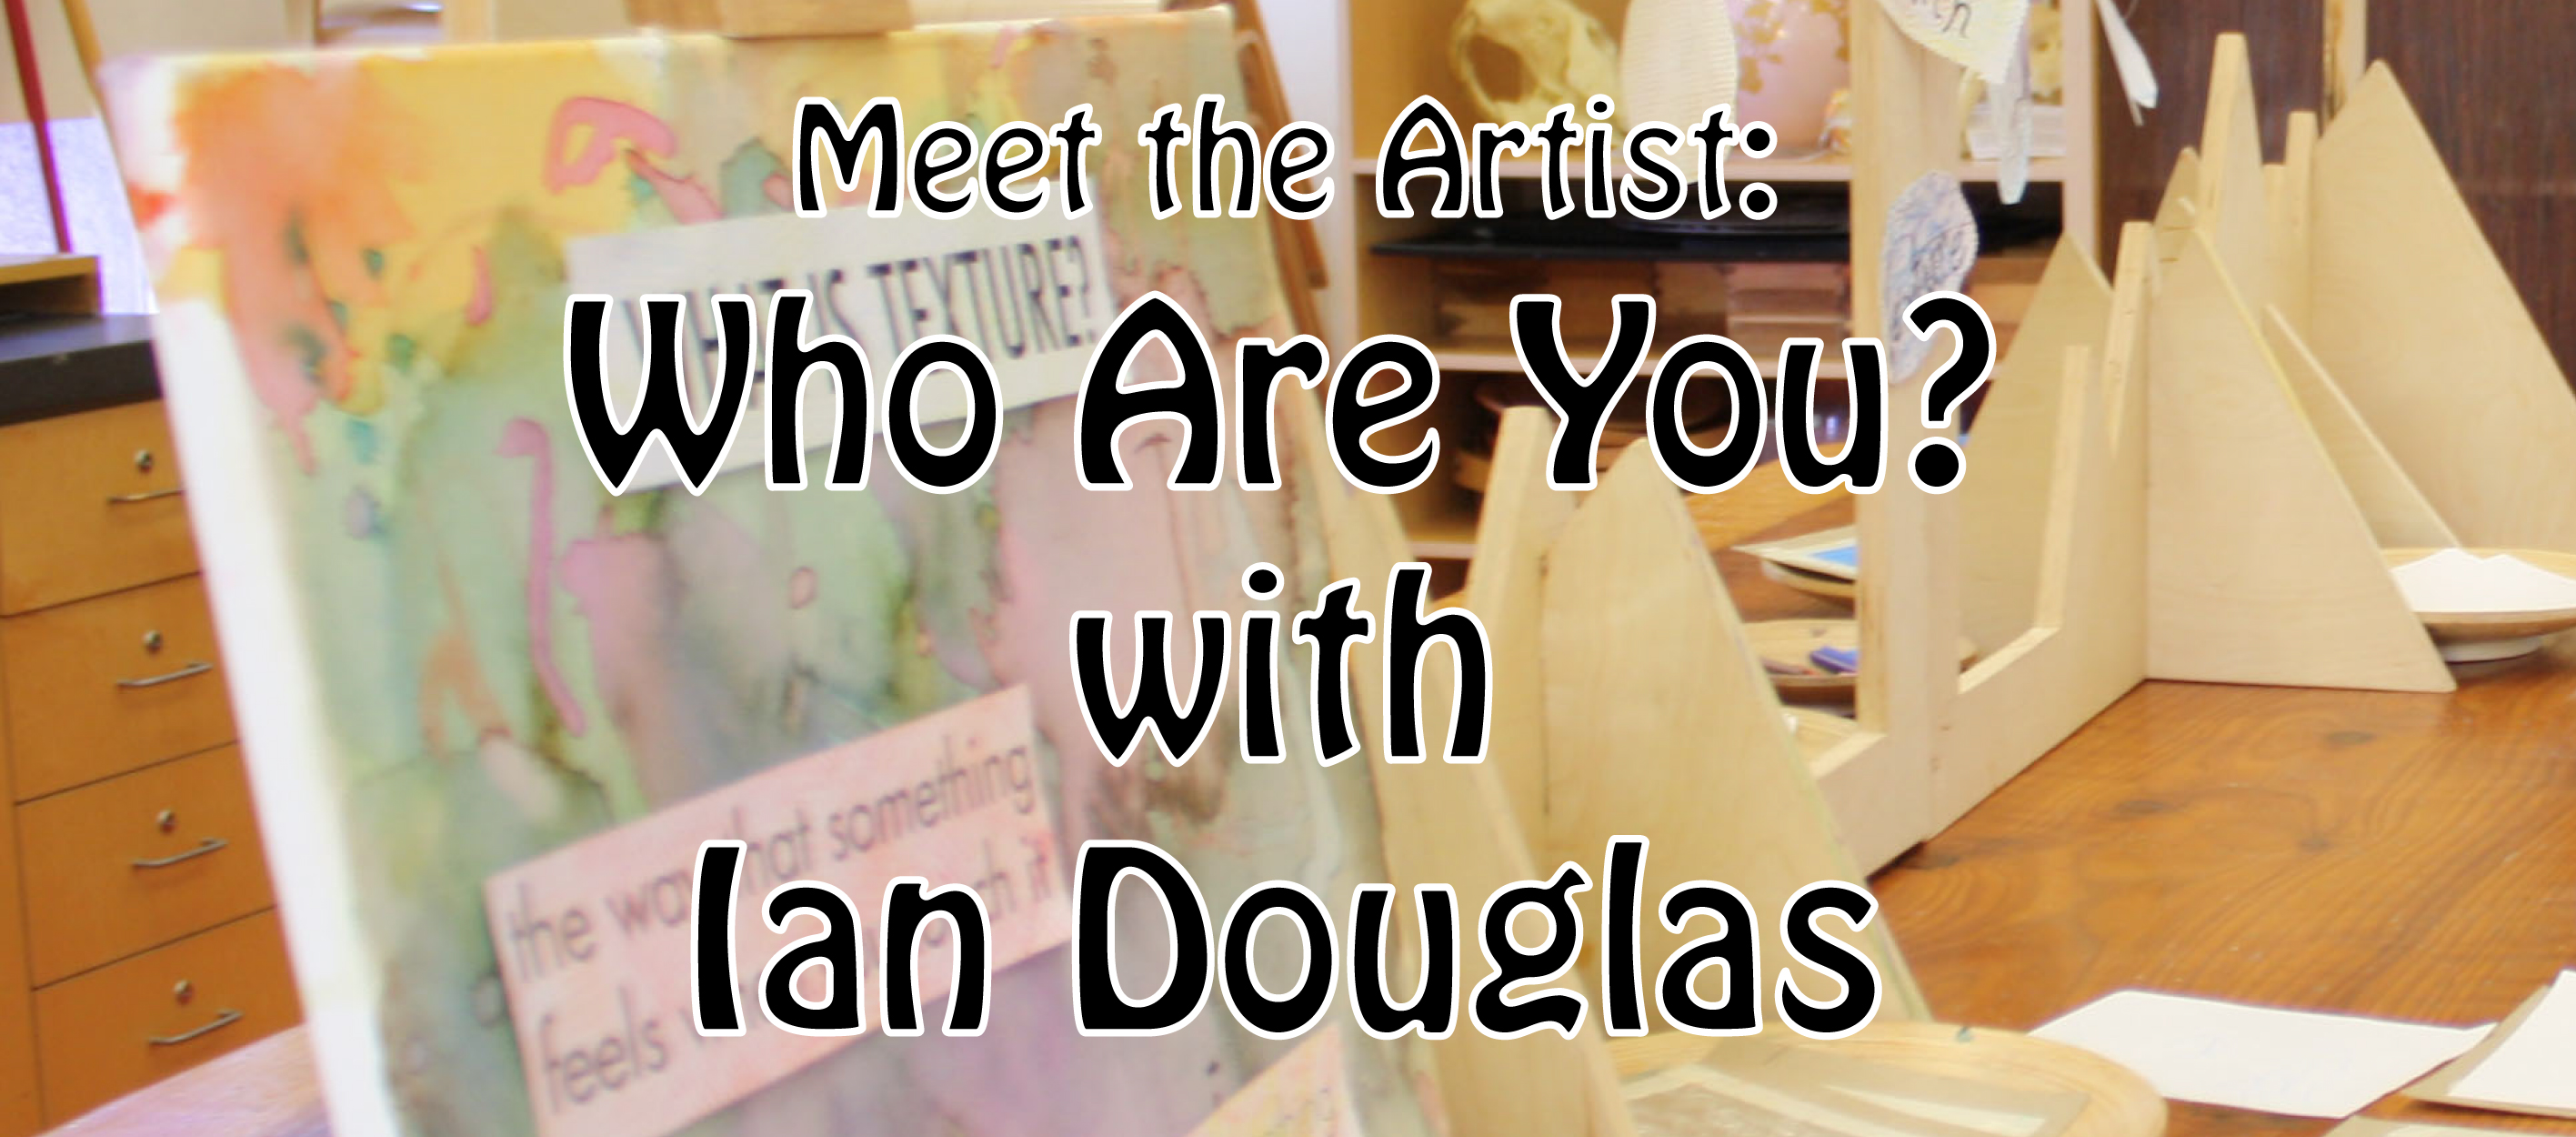 2016-08-14 Meet the Artis_Ian Douglas-01